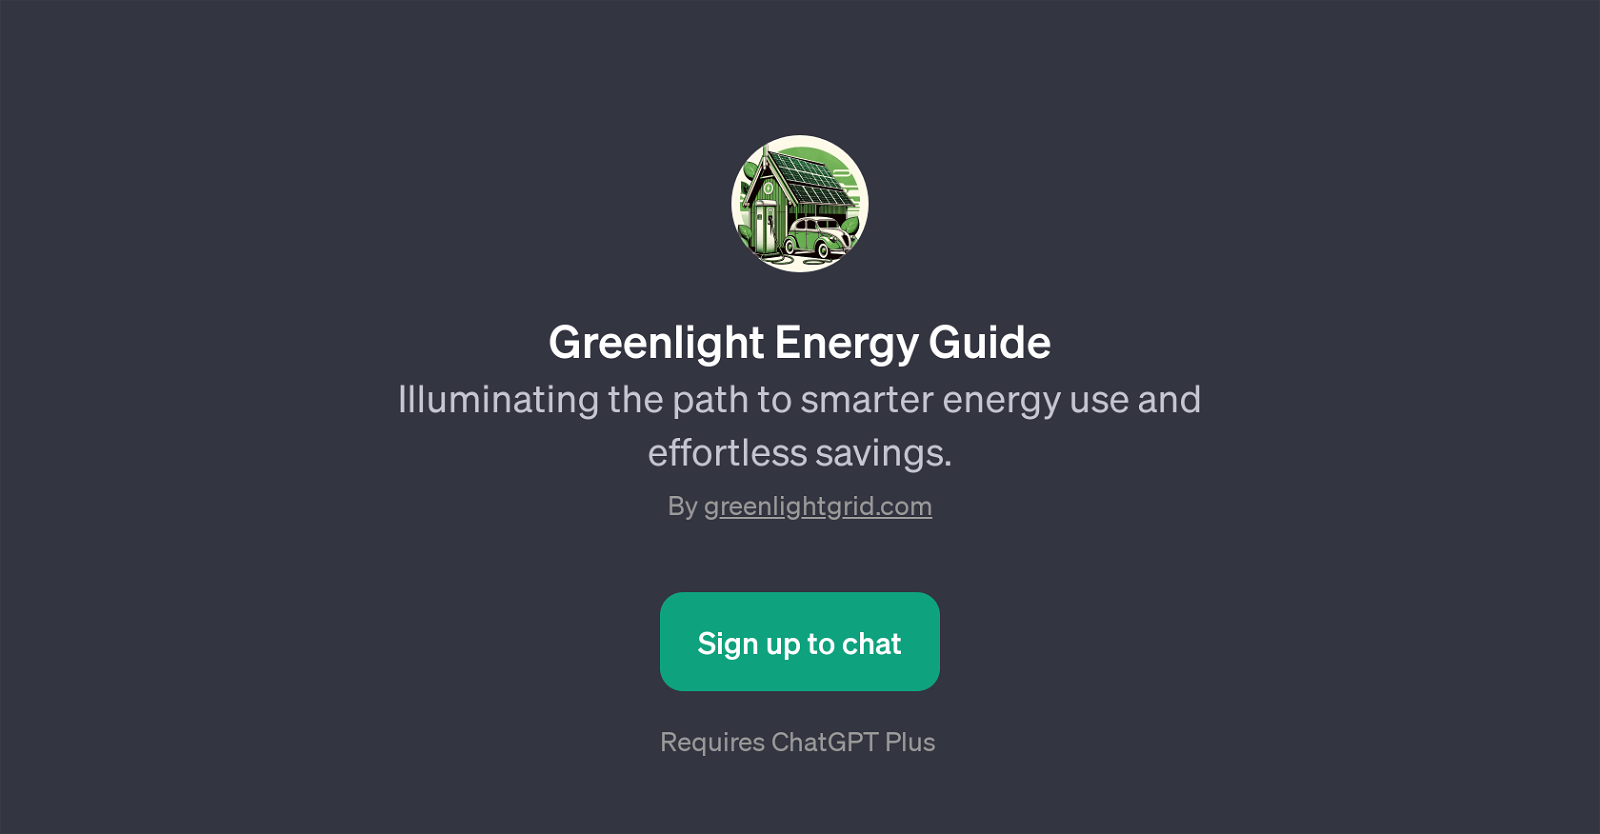 Greenlight Energy Guide website